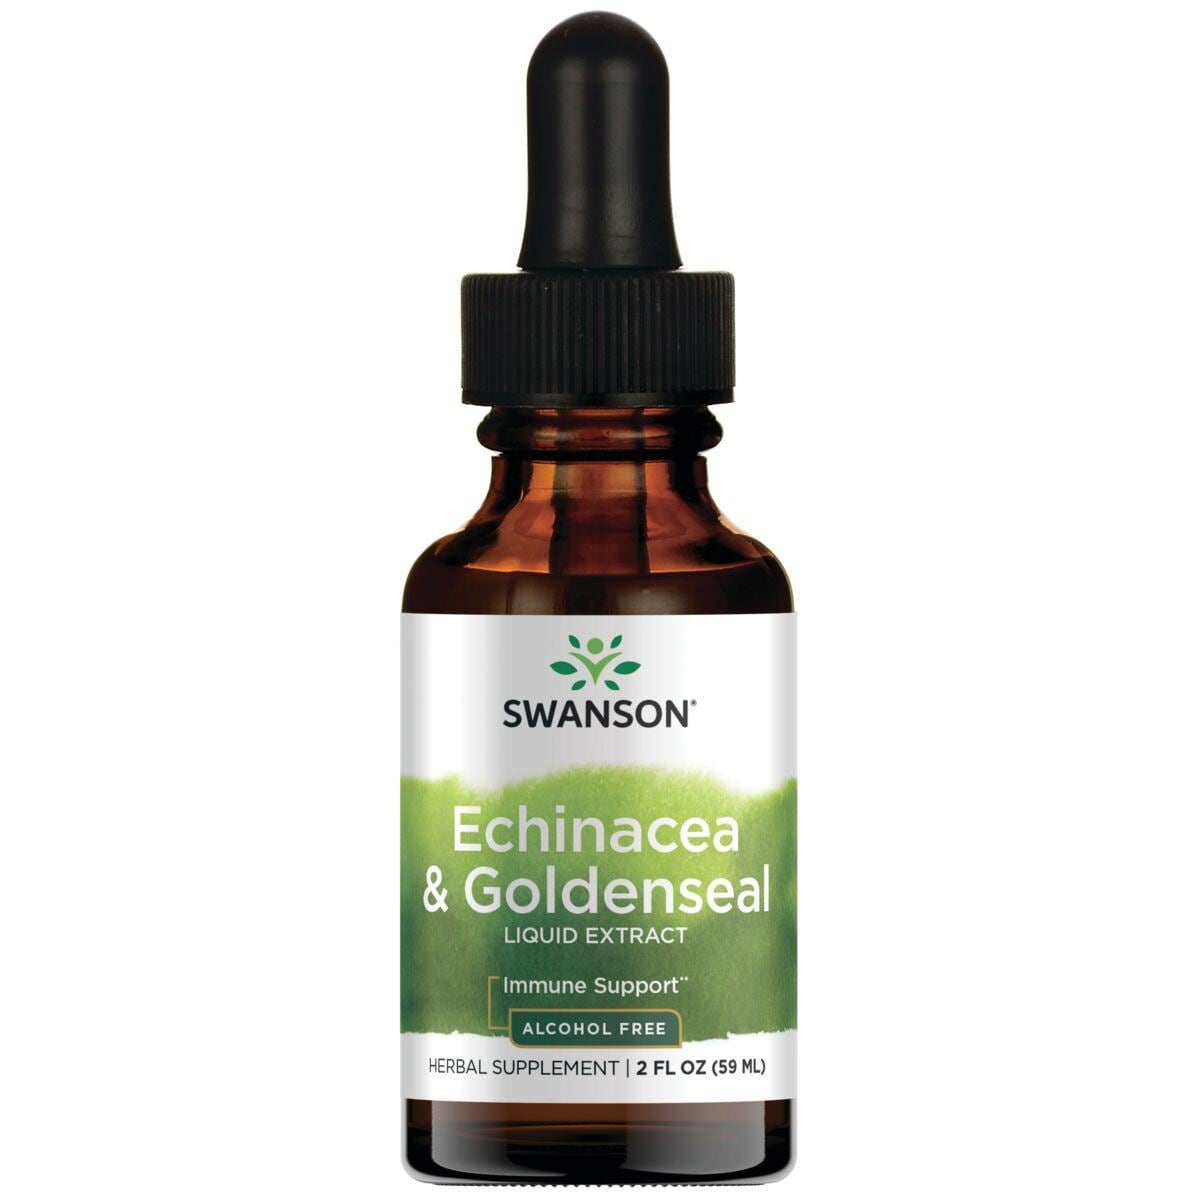 Swanson Premium Echinacea & Goldenseal Liquid Extract - Alcohol Free Vitamin 2 fl oz Liquid Herbs and Supplements